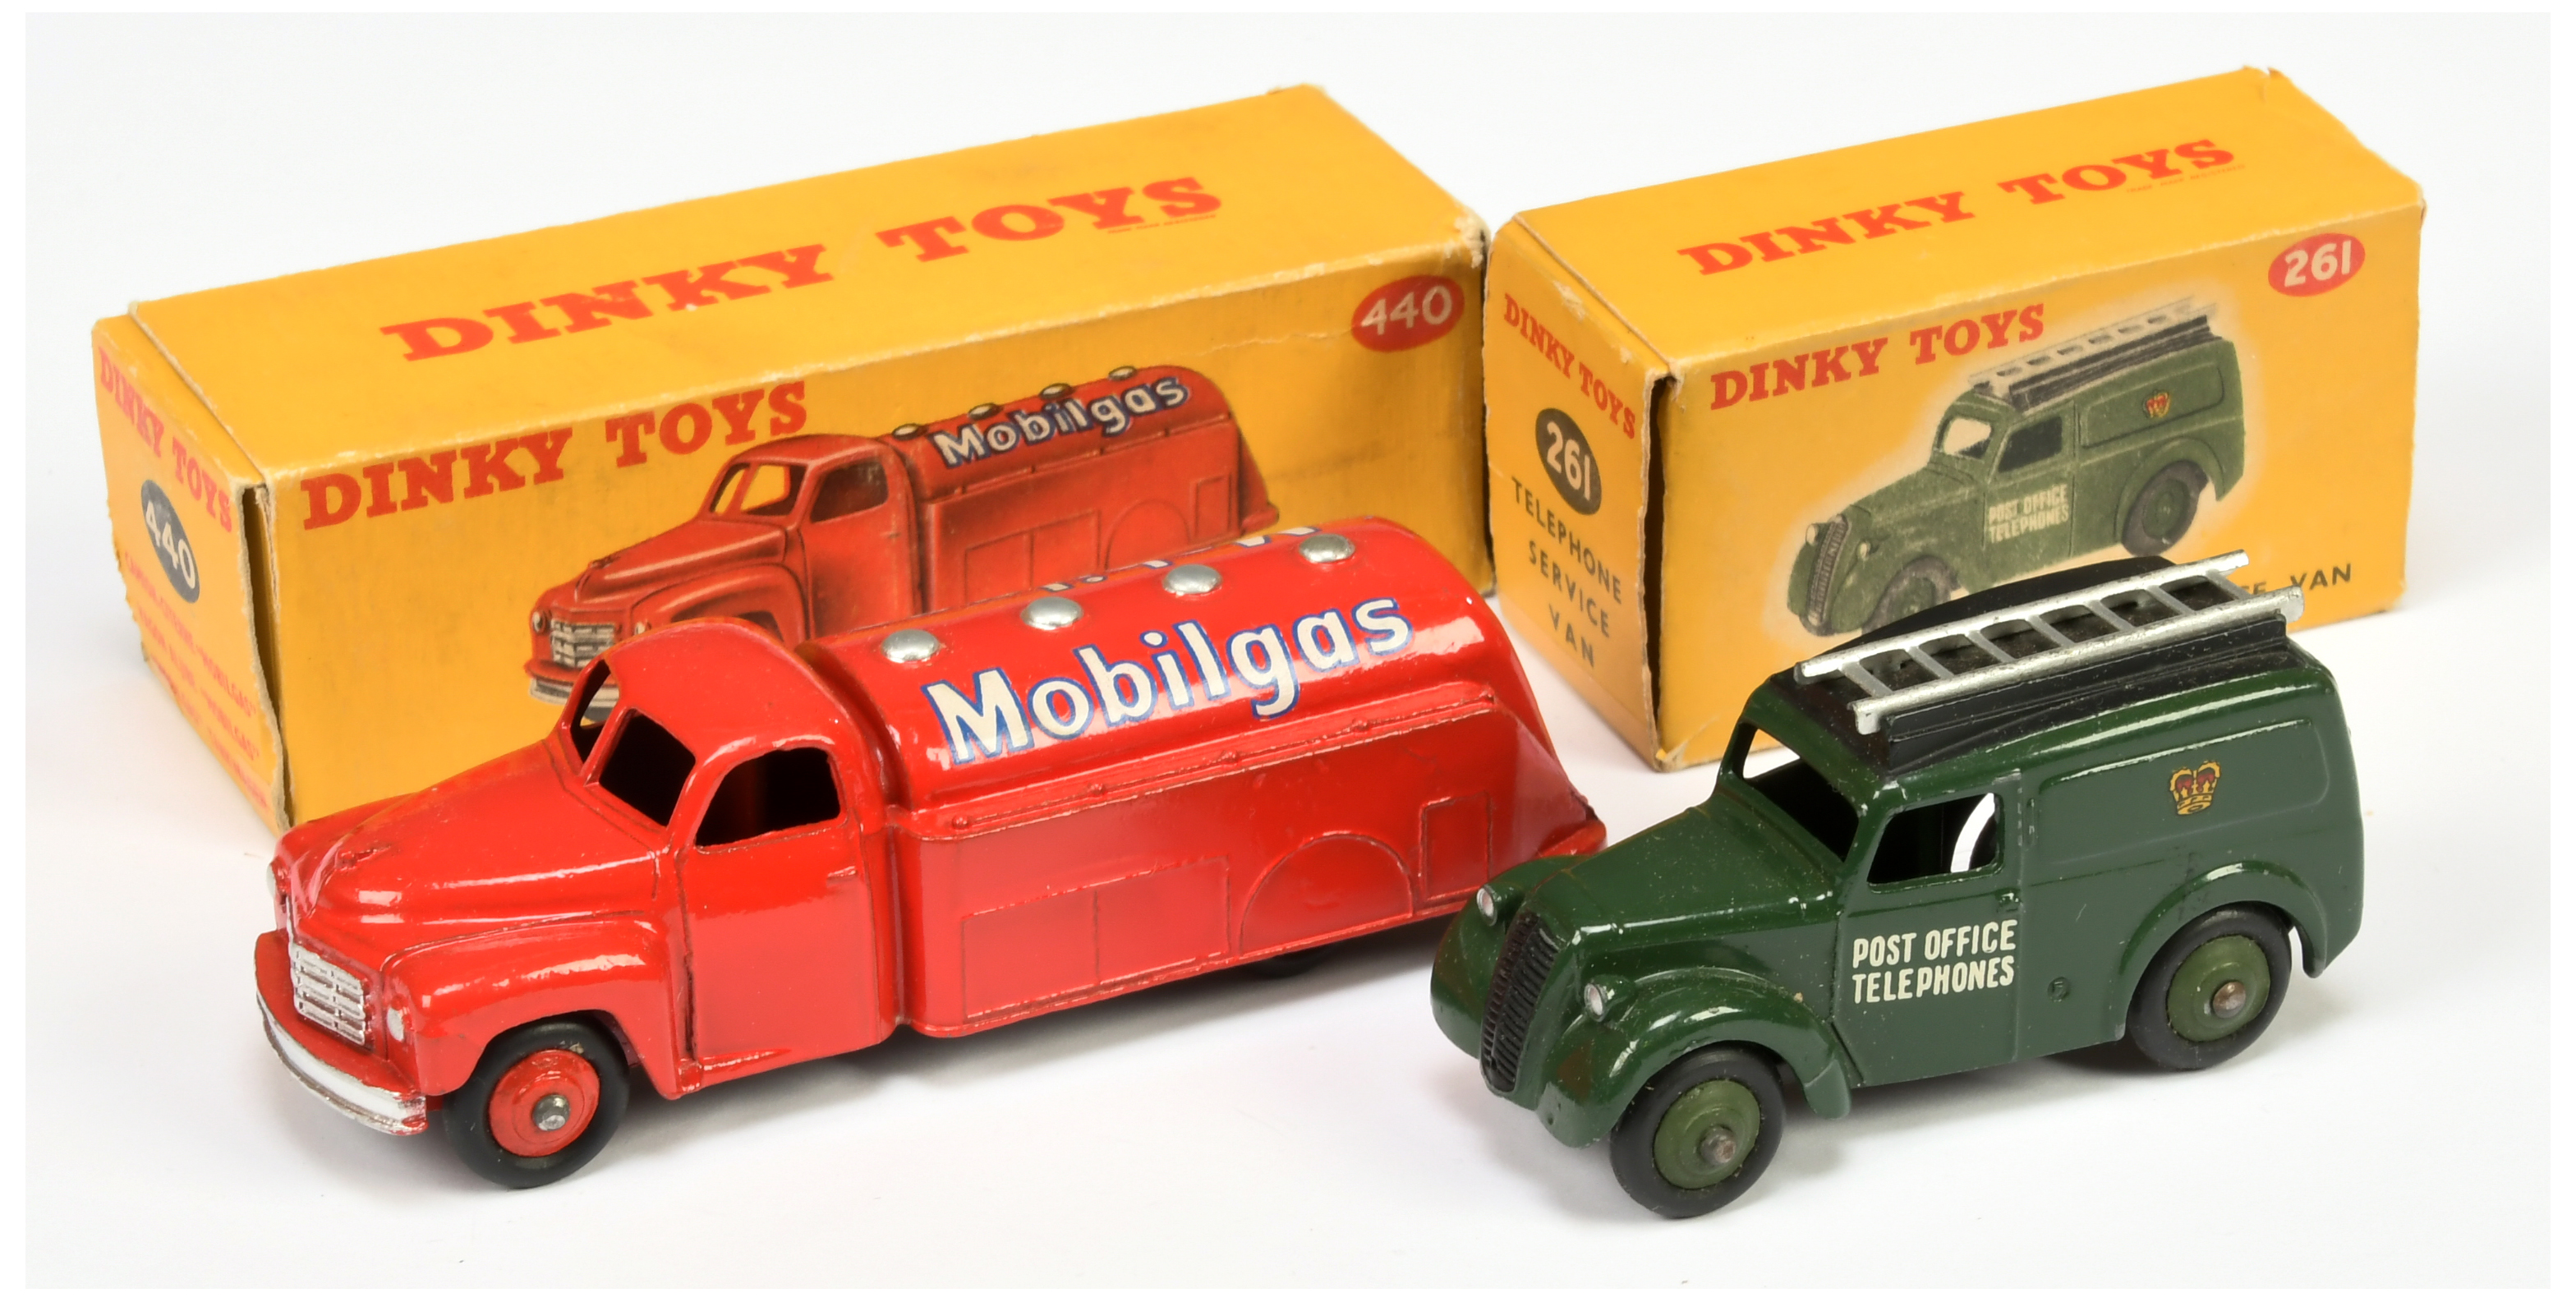 Dinky Toys 261 Morris "Post Office Telephones" Service Van  - Green body, black roof, silver ladd...